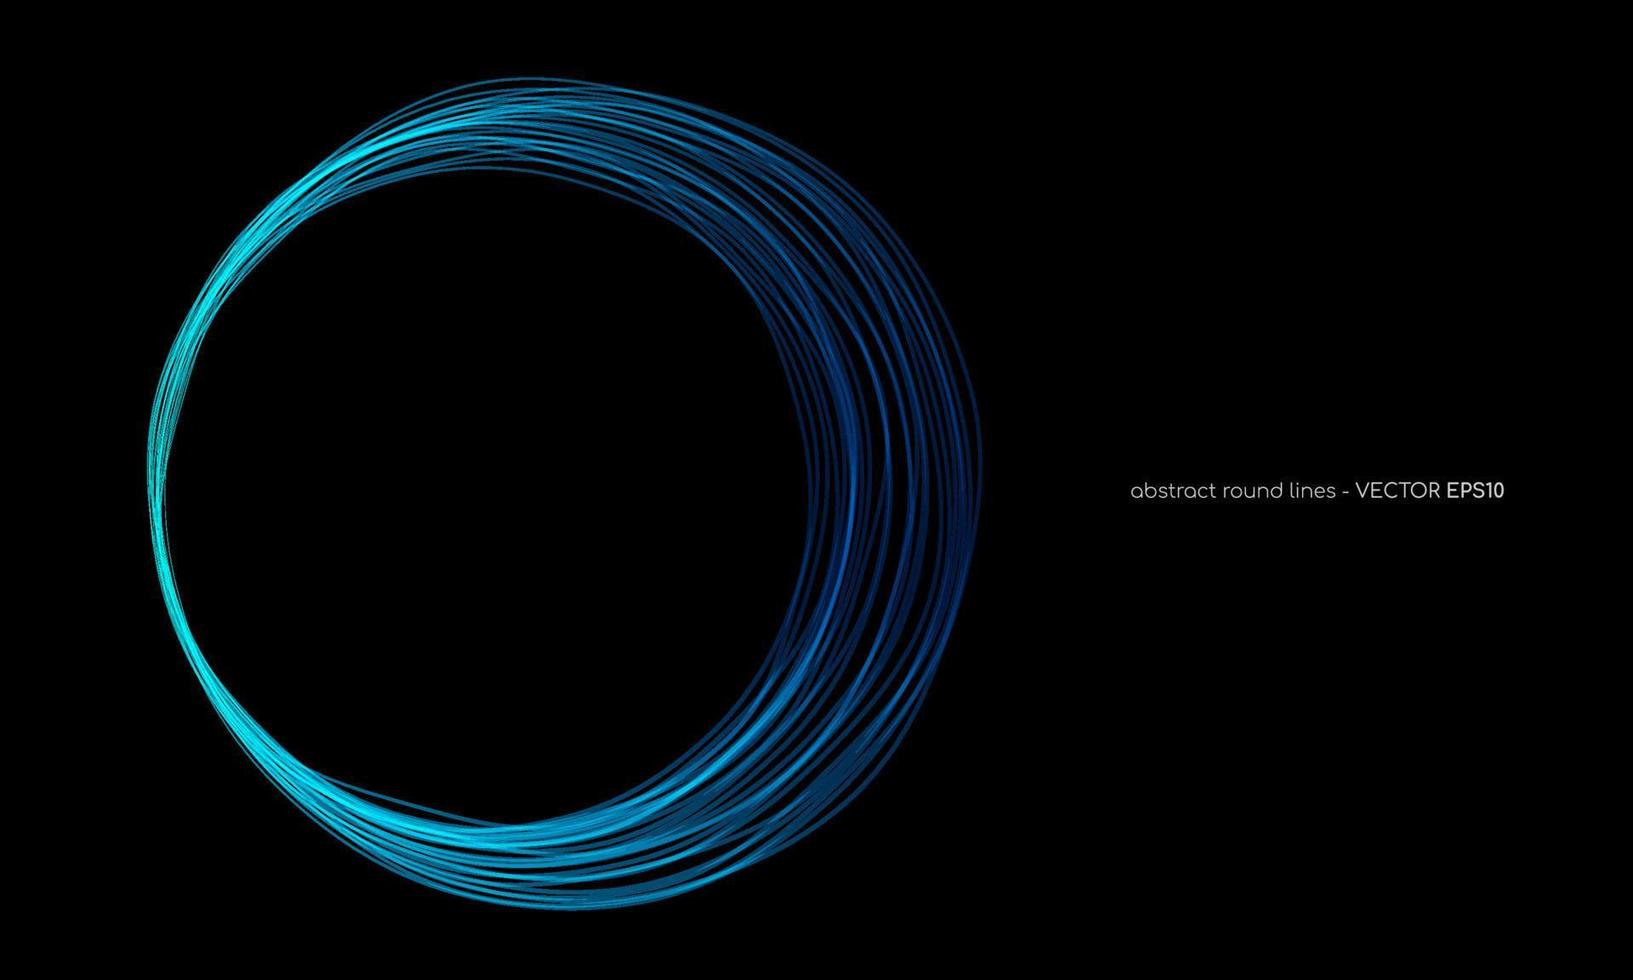 vetor abstrato círculos ondulados linhas rodada quadro cor azul isolada no fundo preto. conceito moderno de tecnologia